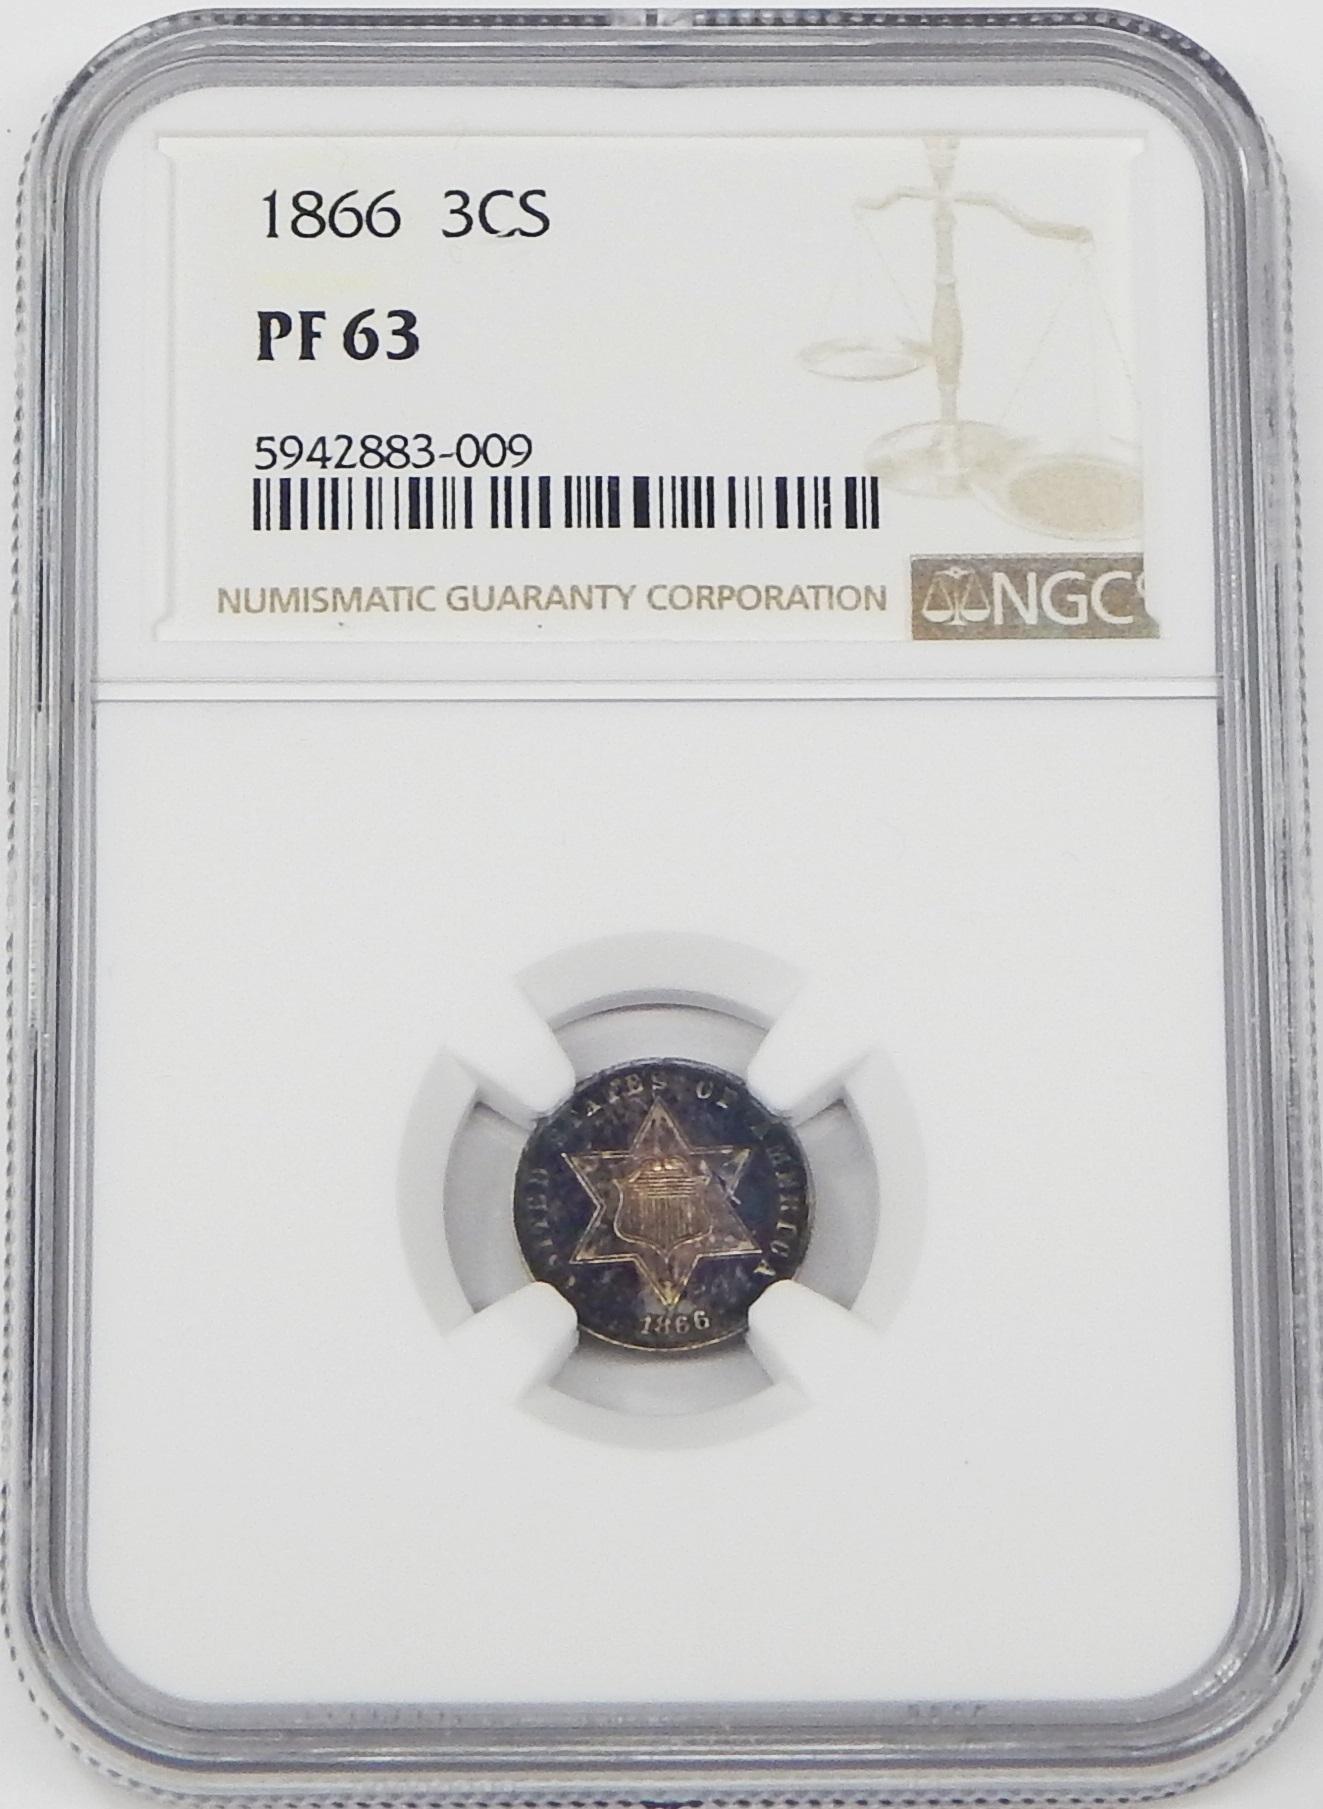 1866 PROOF SILVER THREE CENT PIECE - NGC PF63